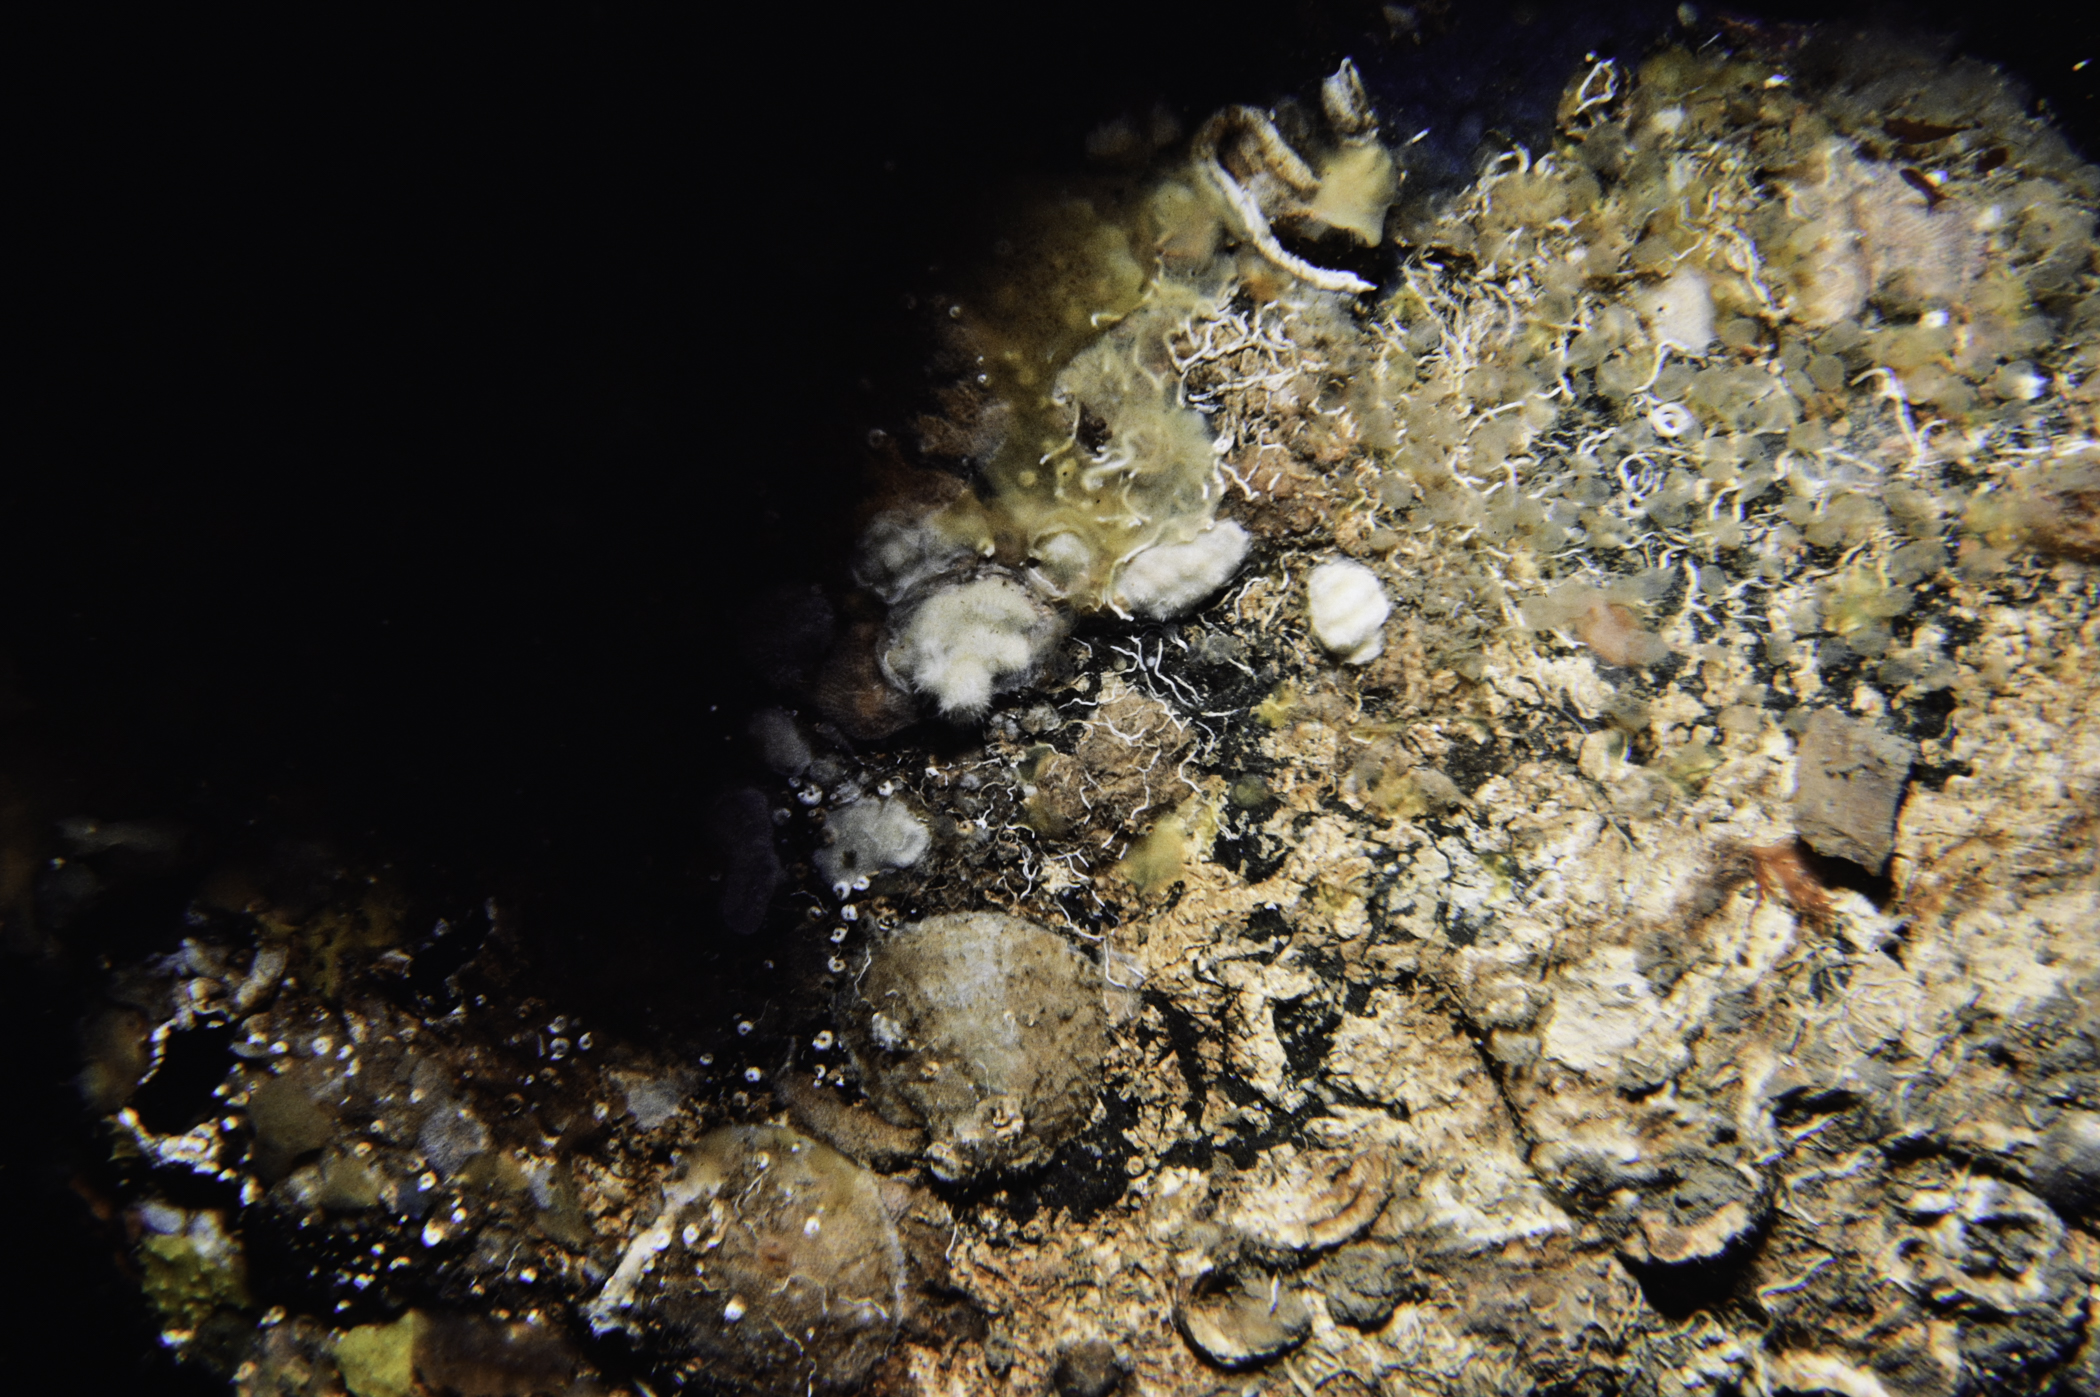 Pododesmus patelliformis, Perophora listeri. Site: Murlough Bay. 